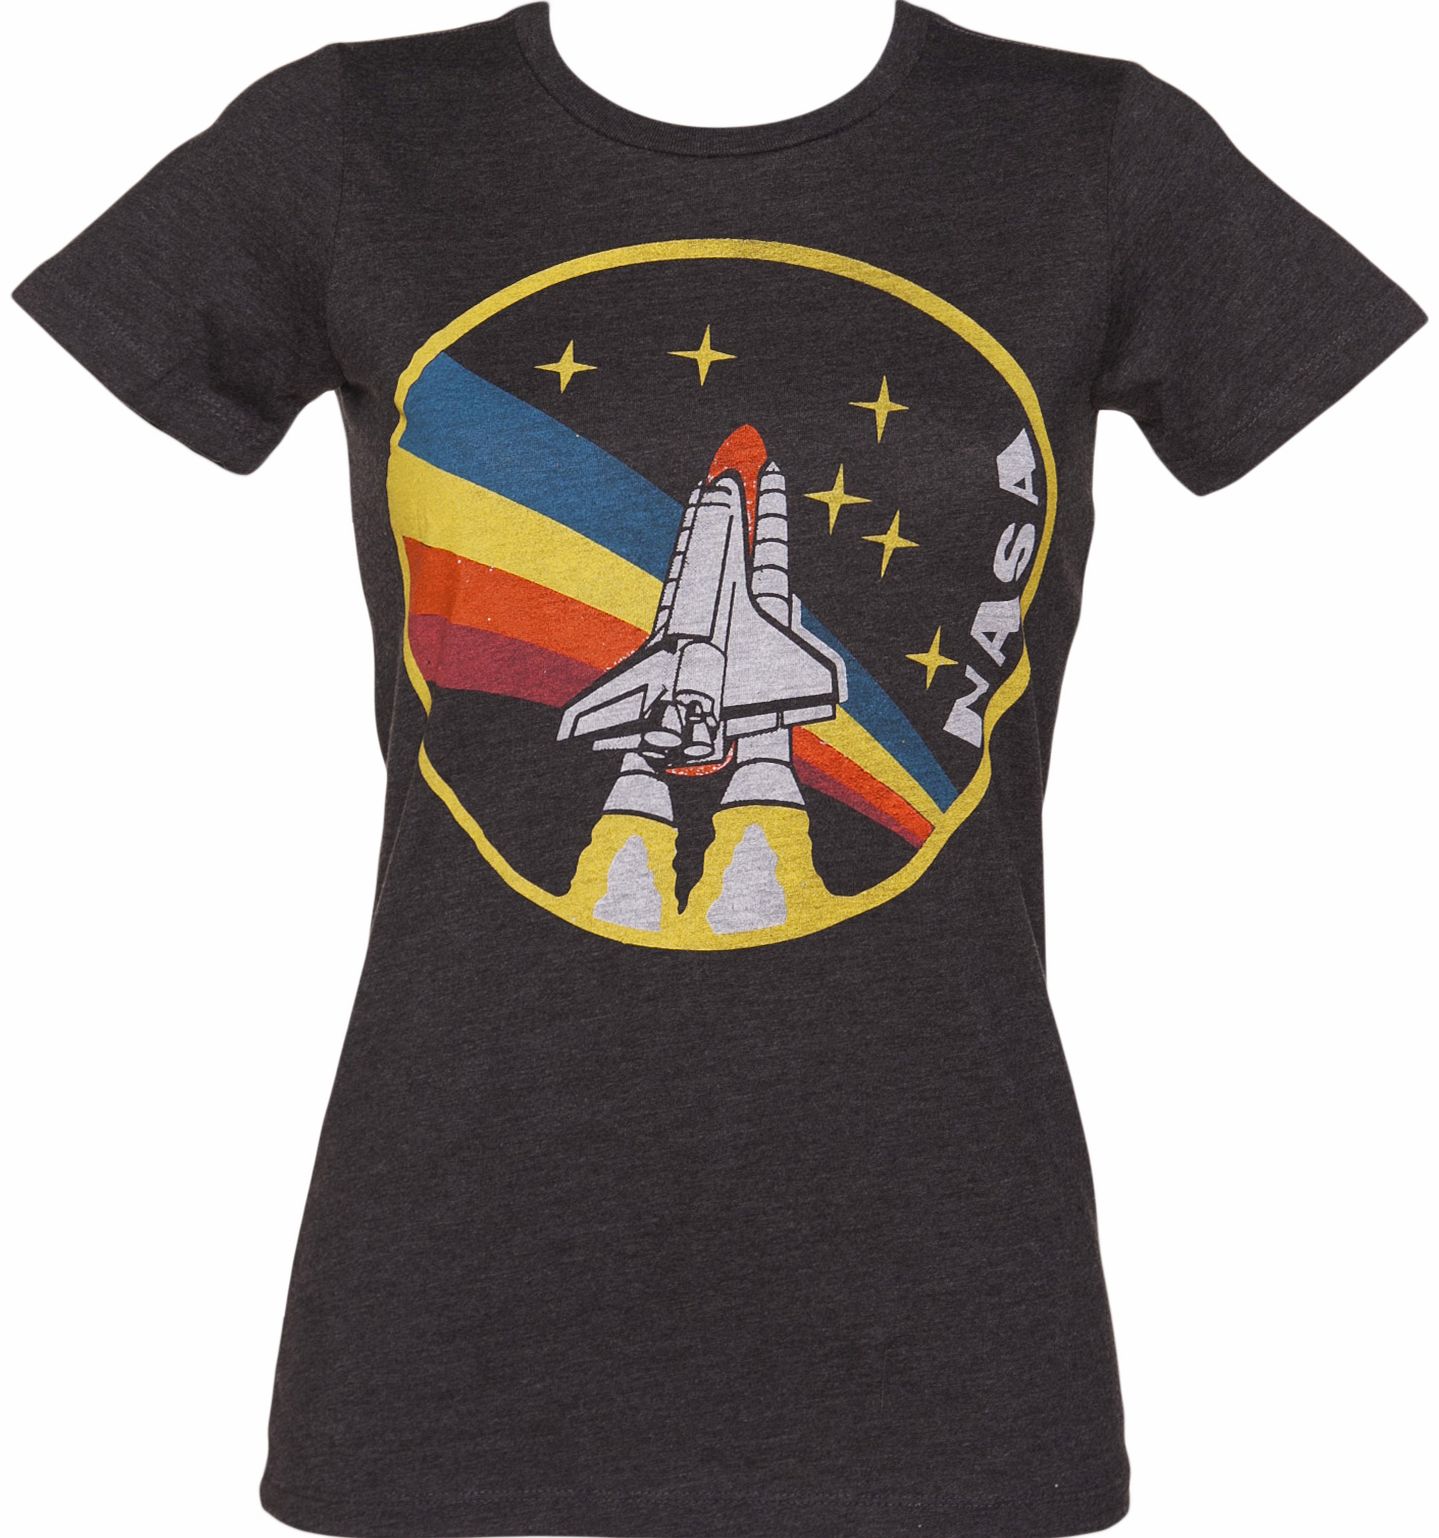 Ladies Black Triblend Rainbow NASA T-Shirt from